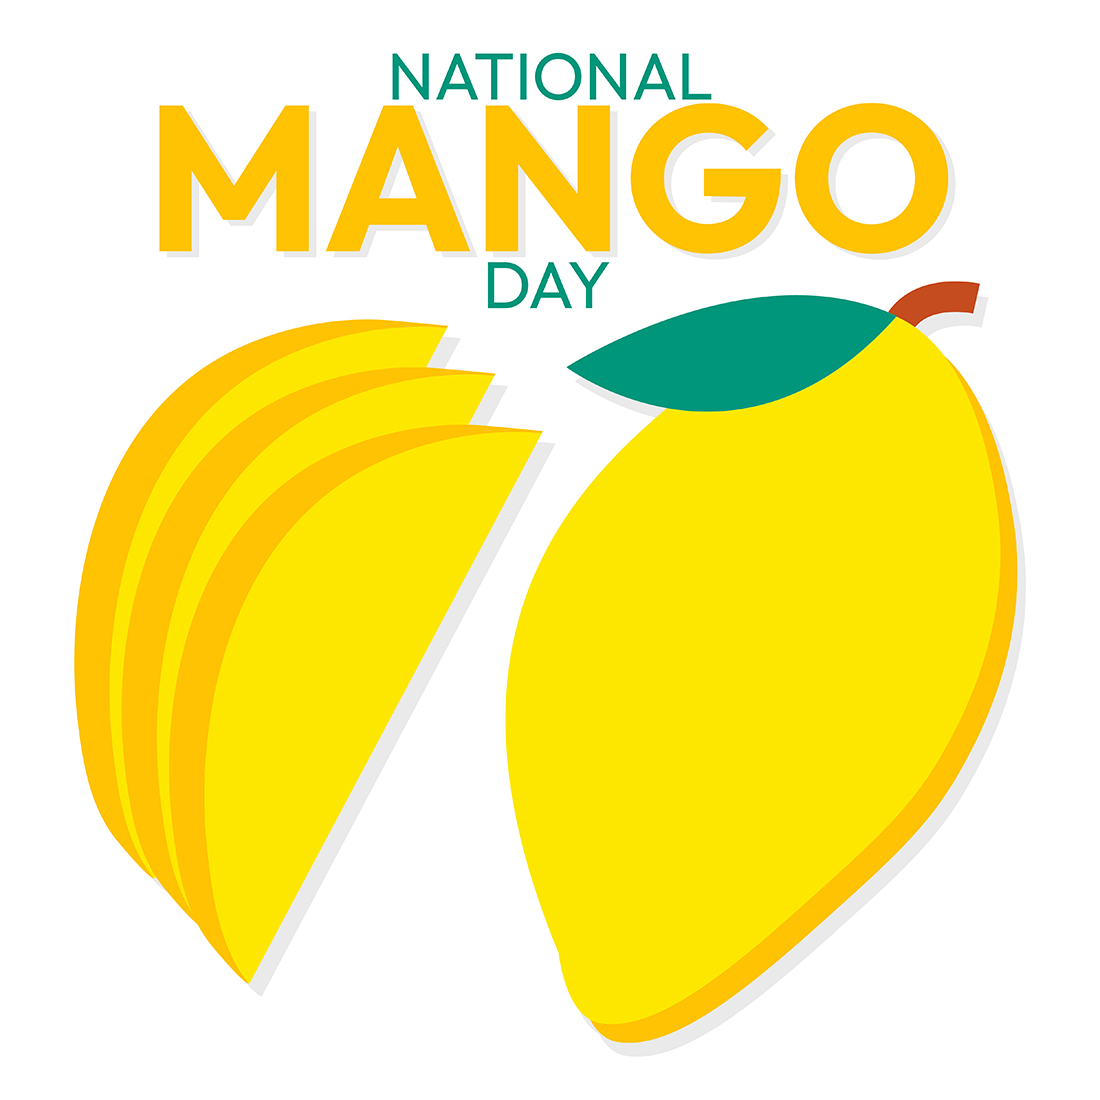 National mango day illustration 3 templates cover image.